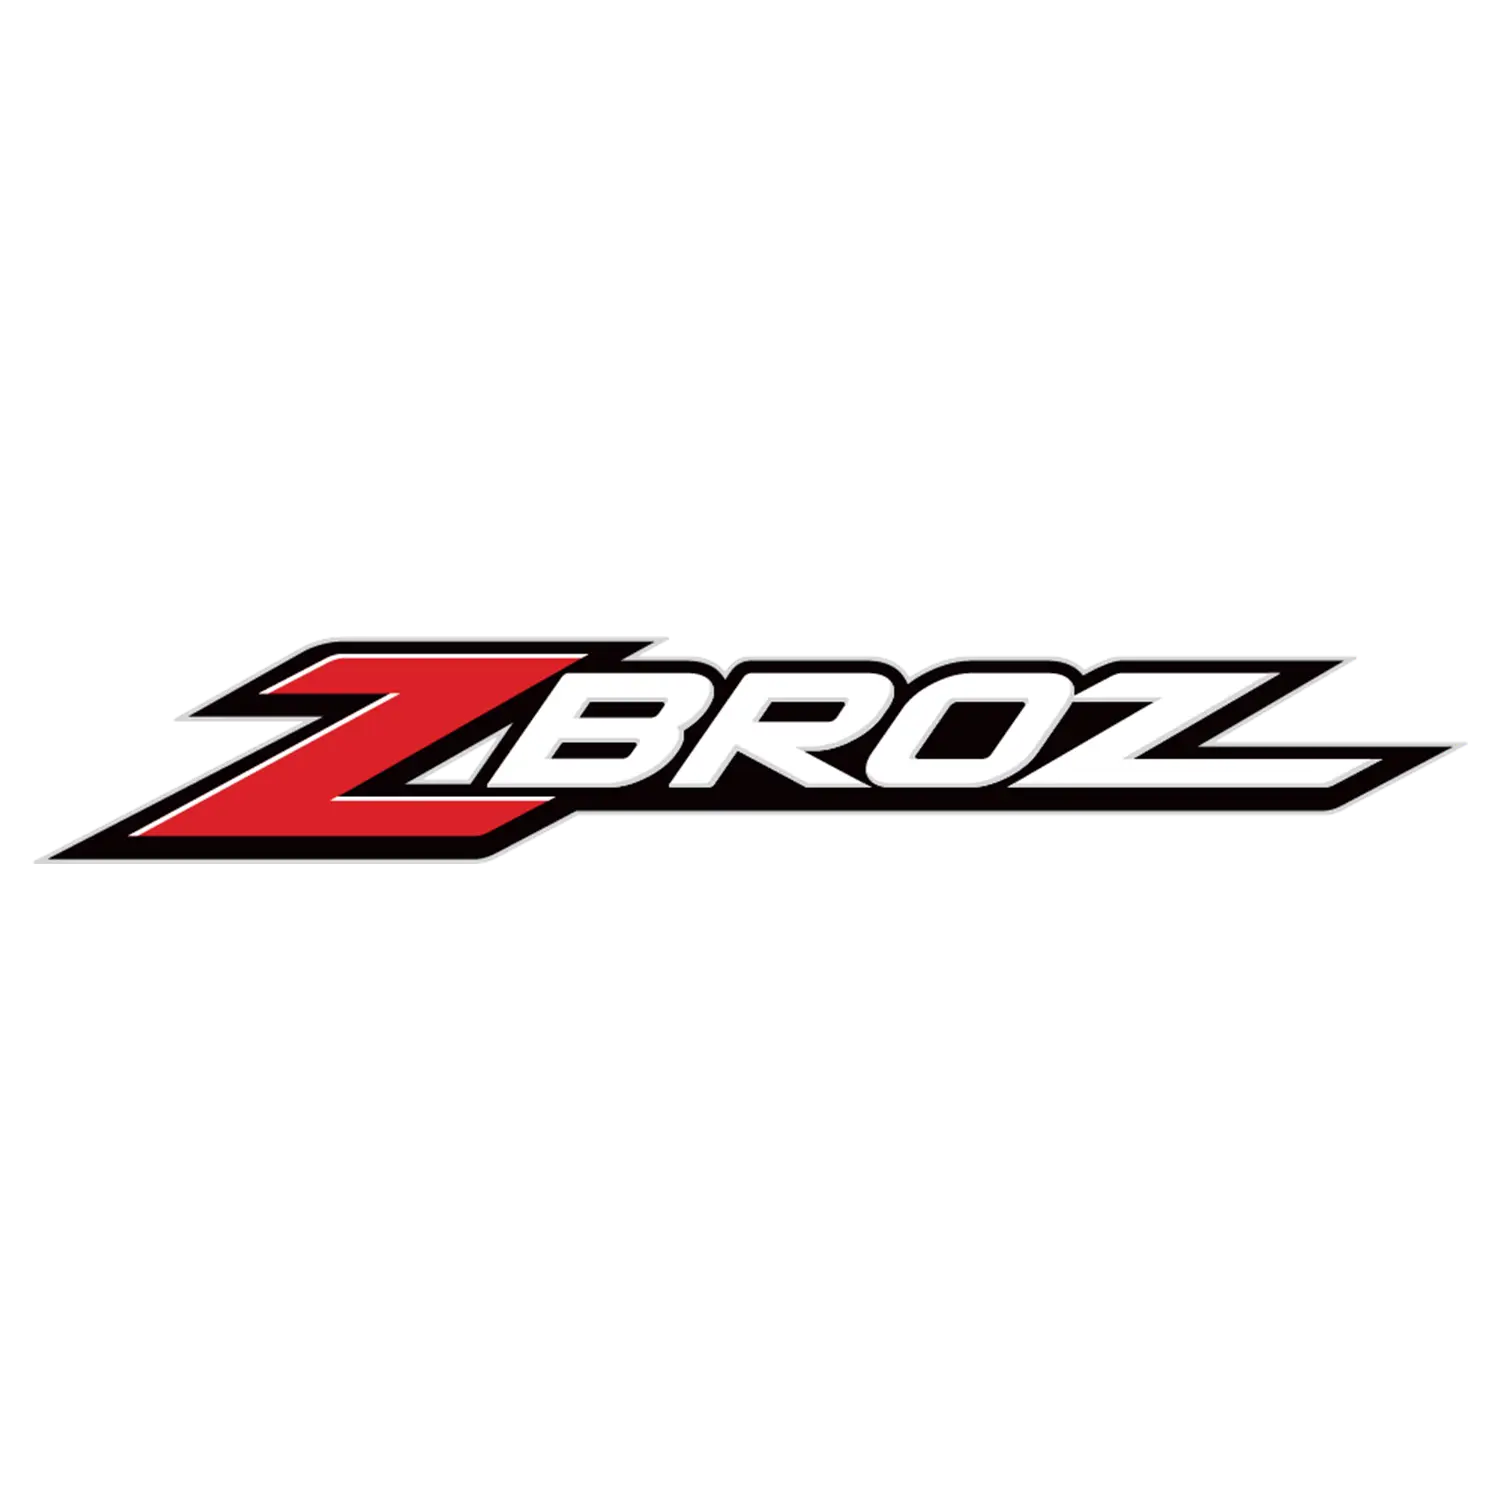 ZBROZ Racing